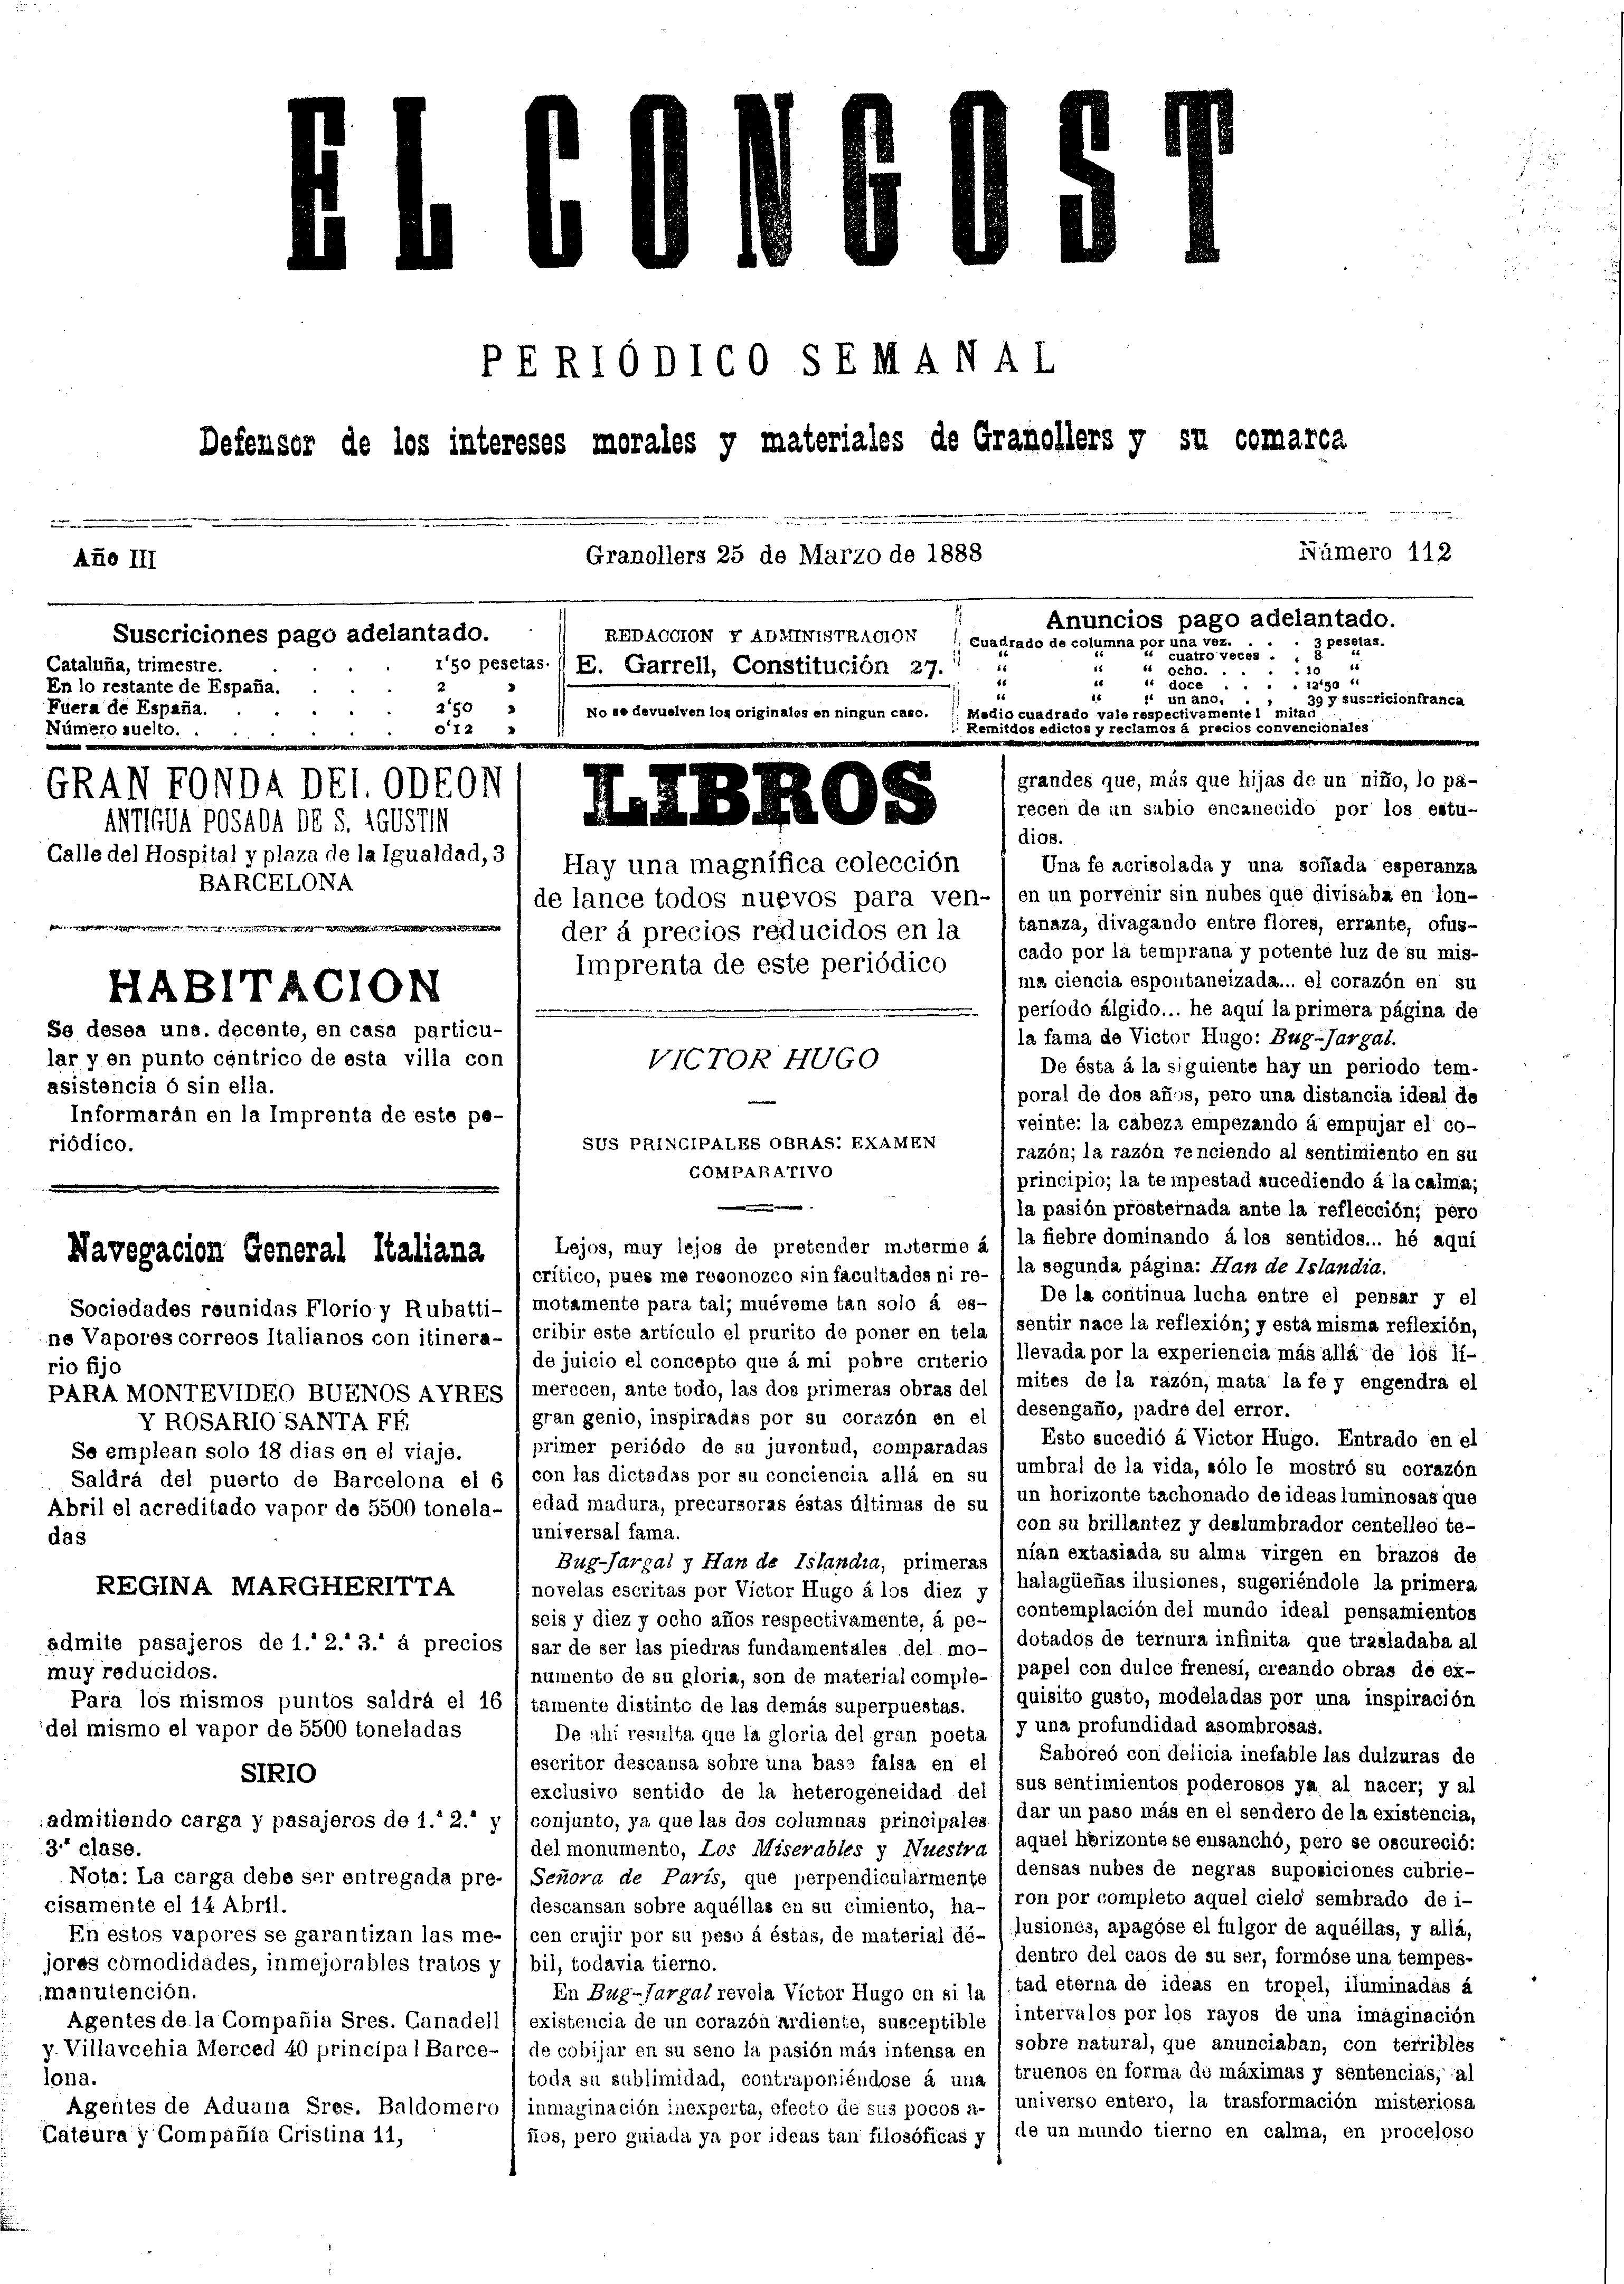 El Congost, 25/3/1888 [Ejemplar]